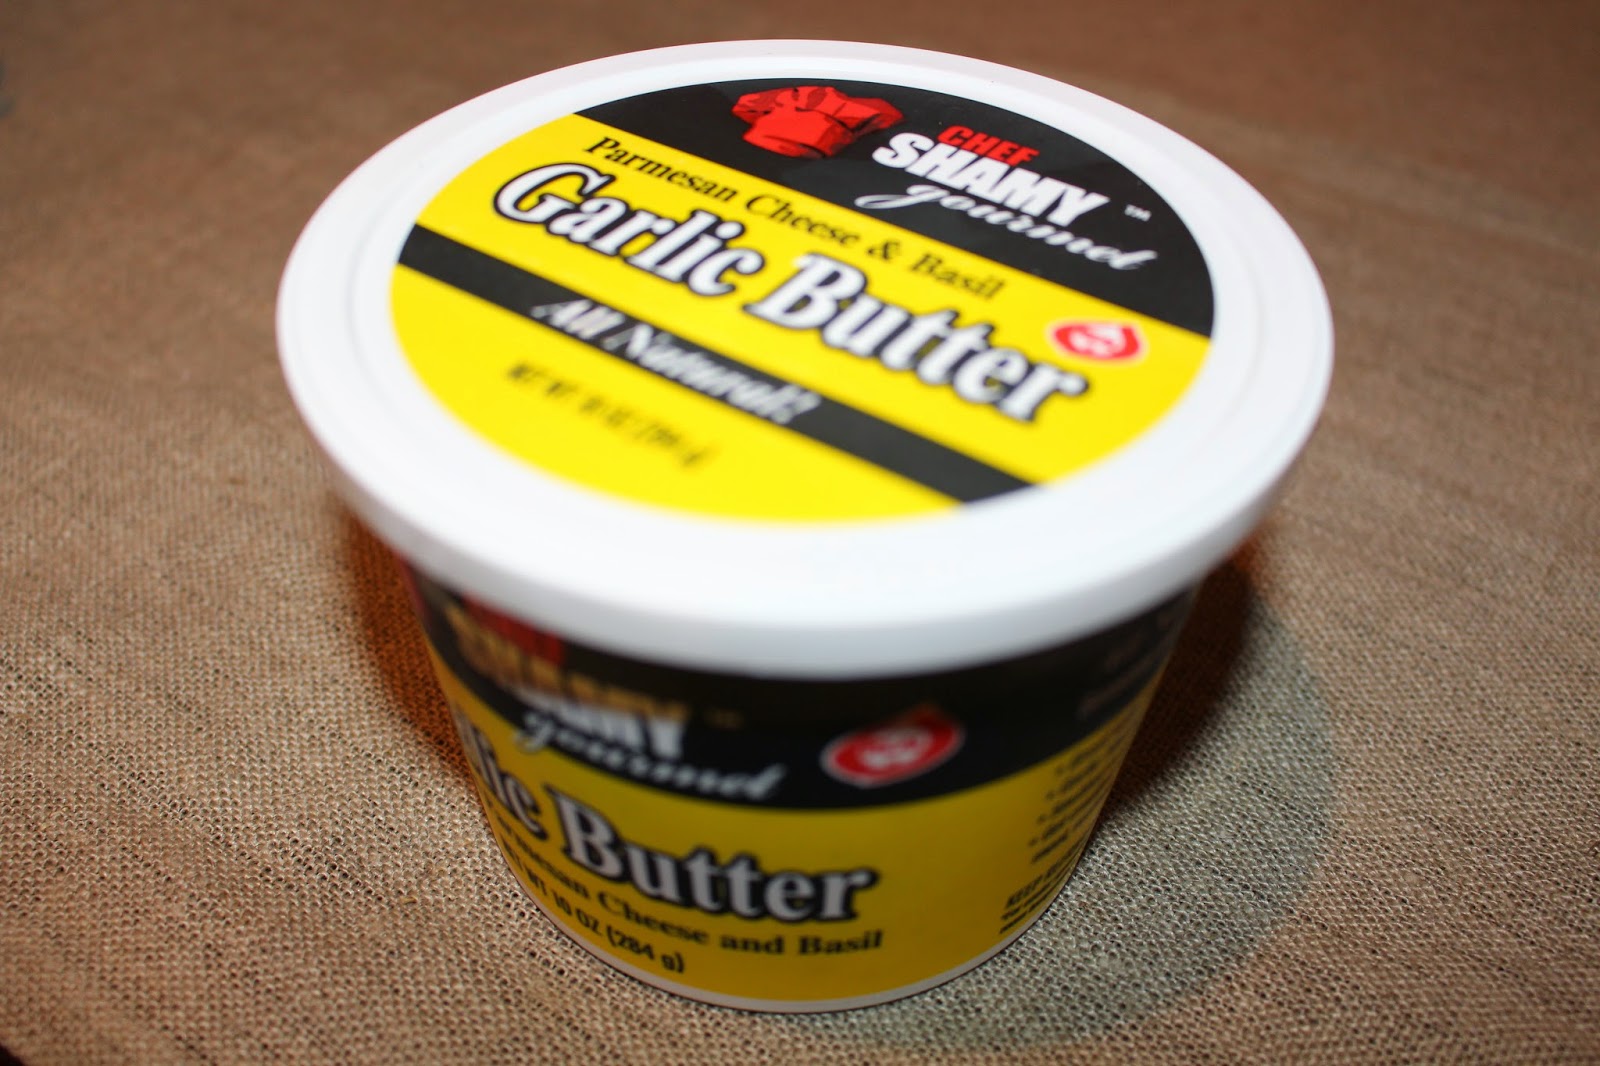 Butter Makes Life Better